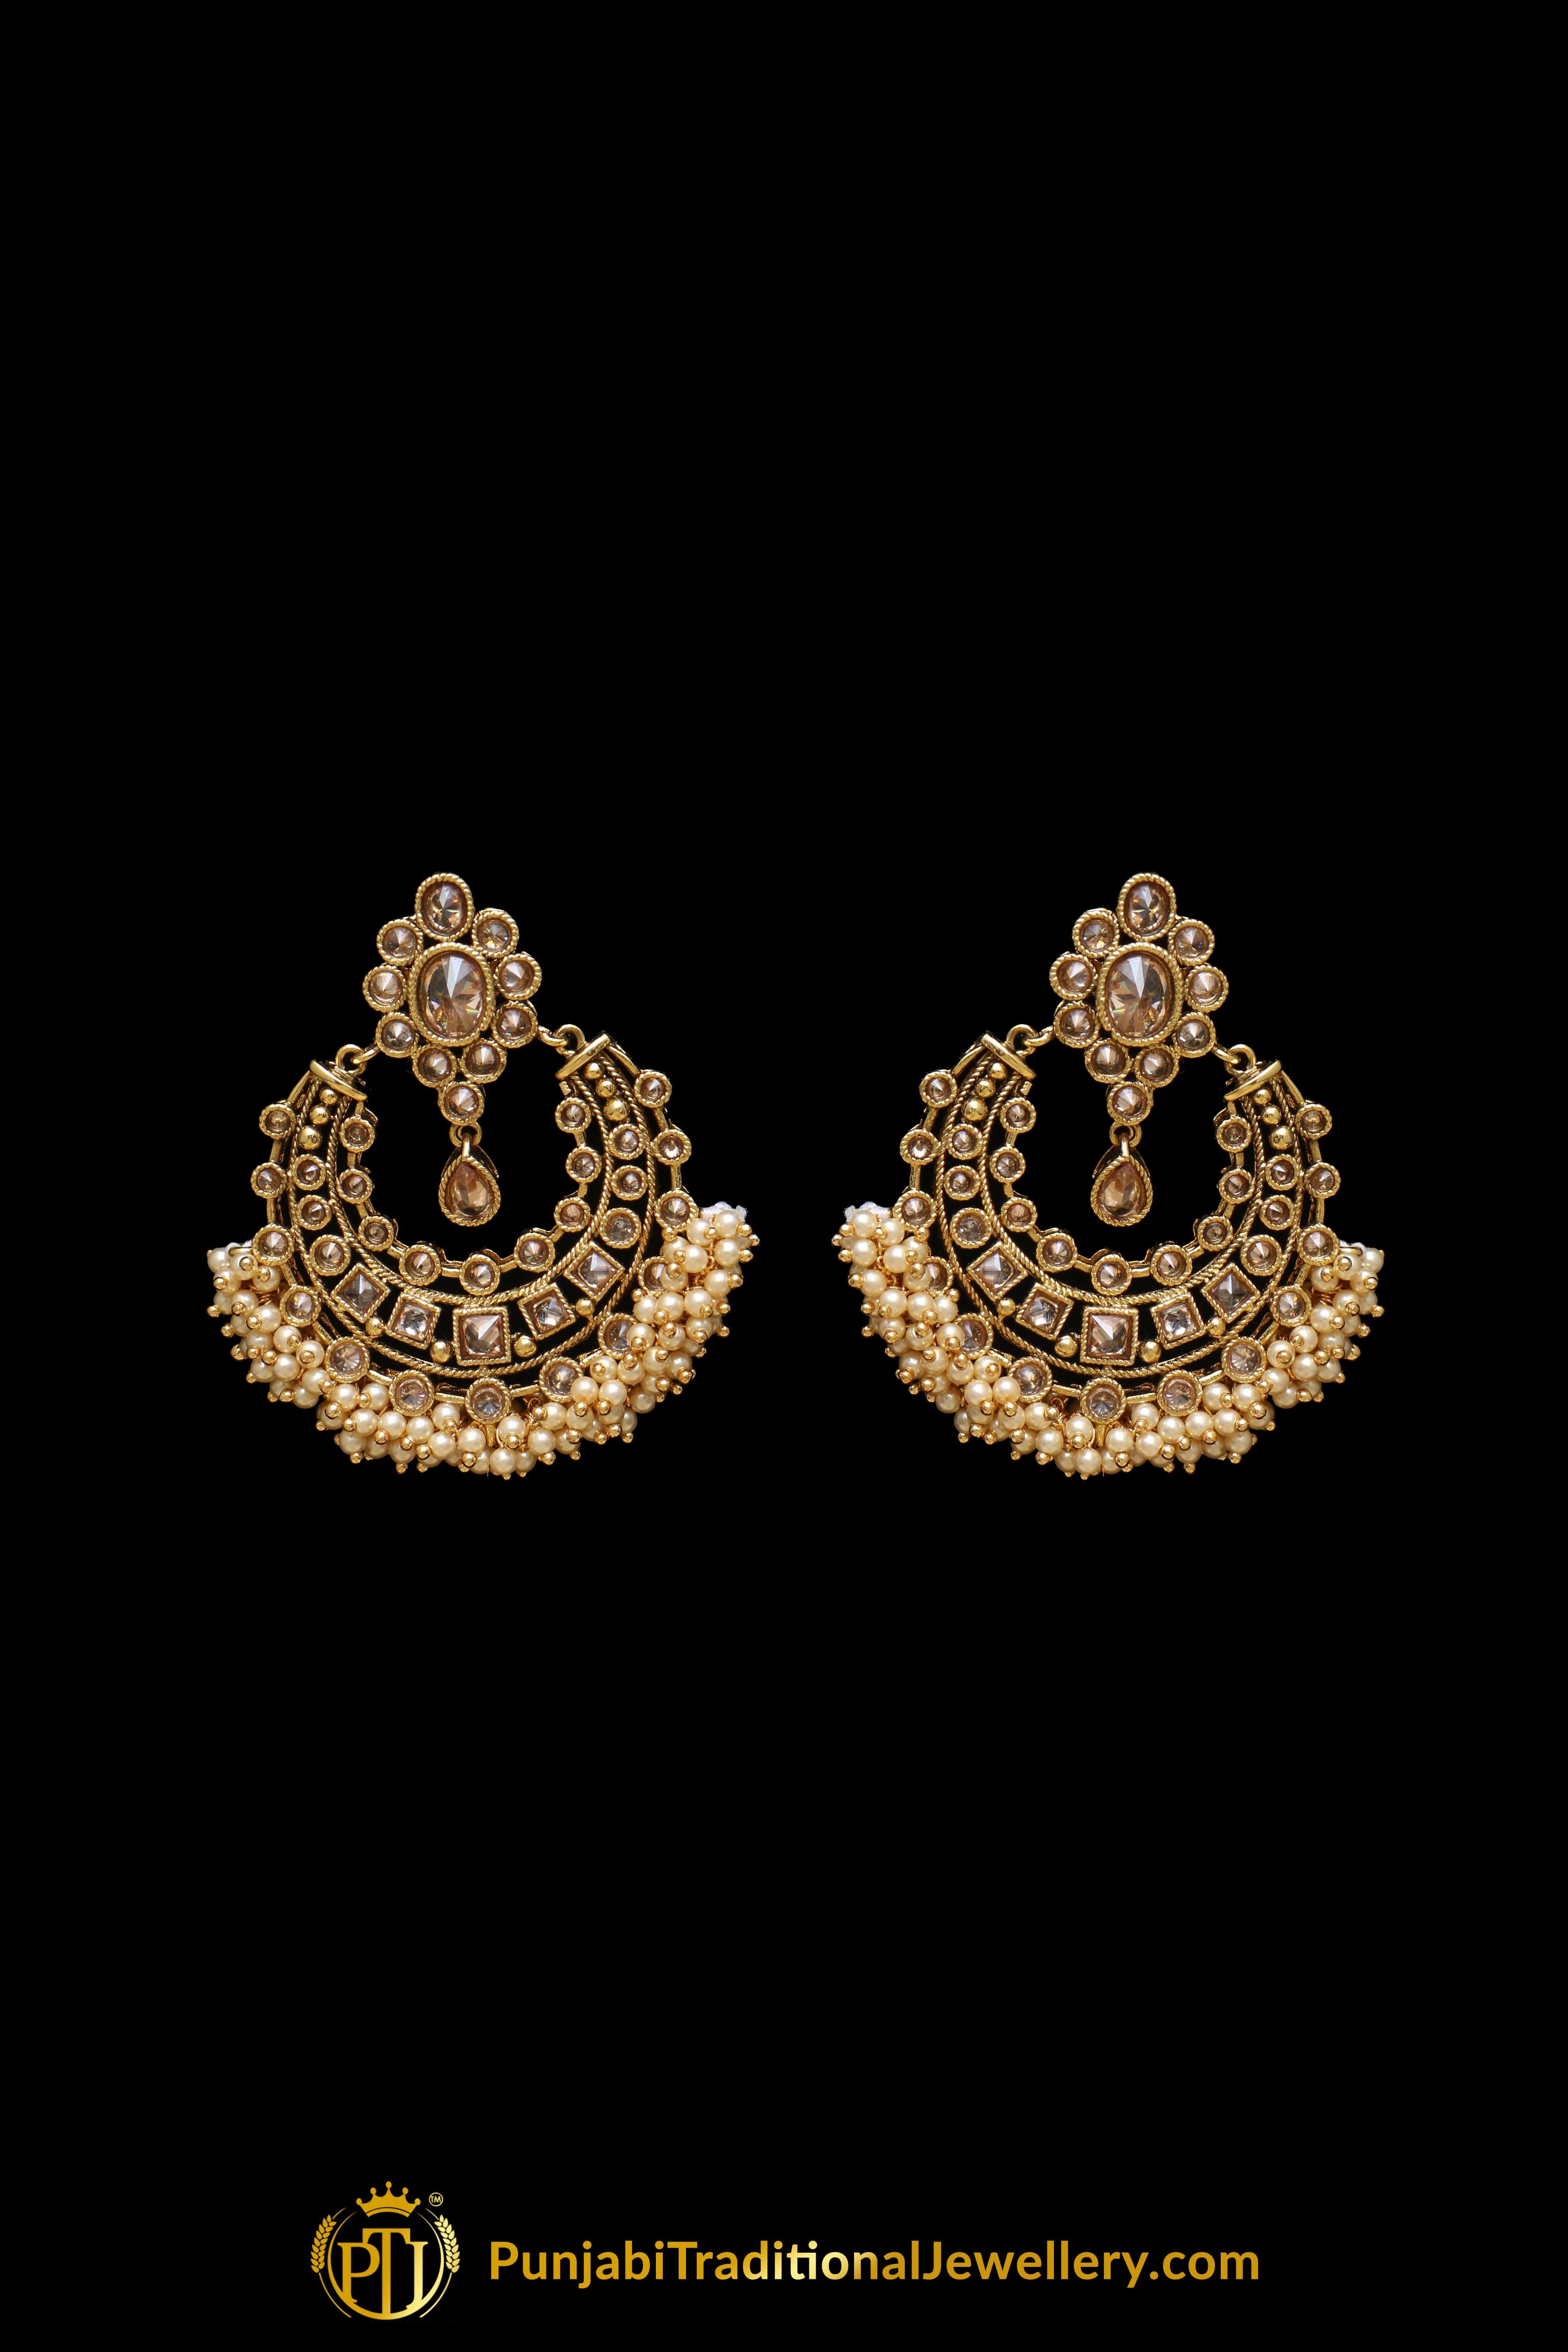 Gold Antique Chandbali Design - Indian Jewelry Designs